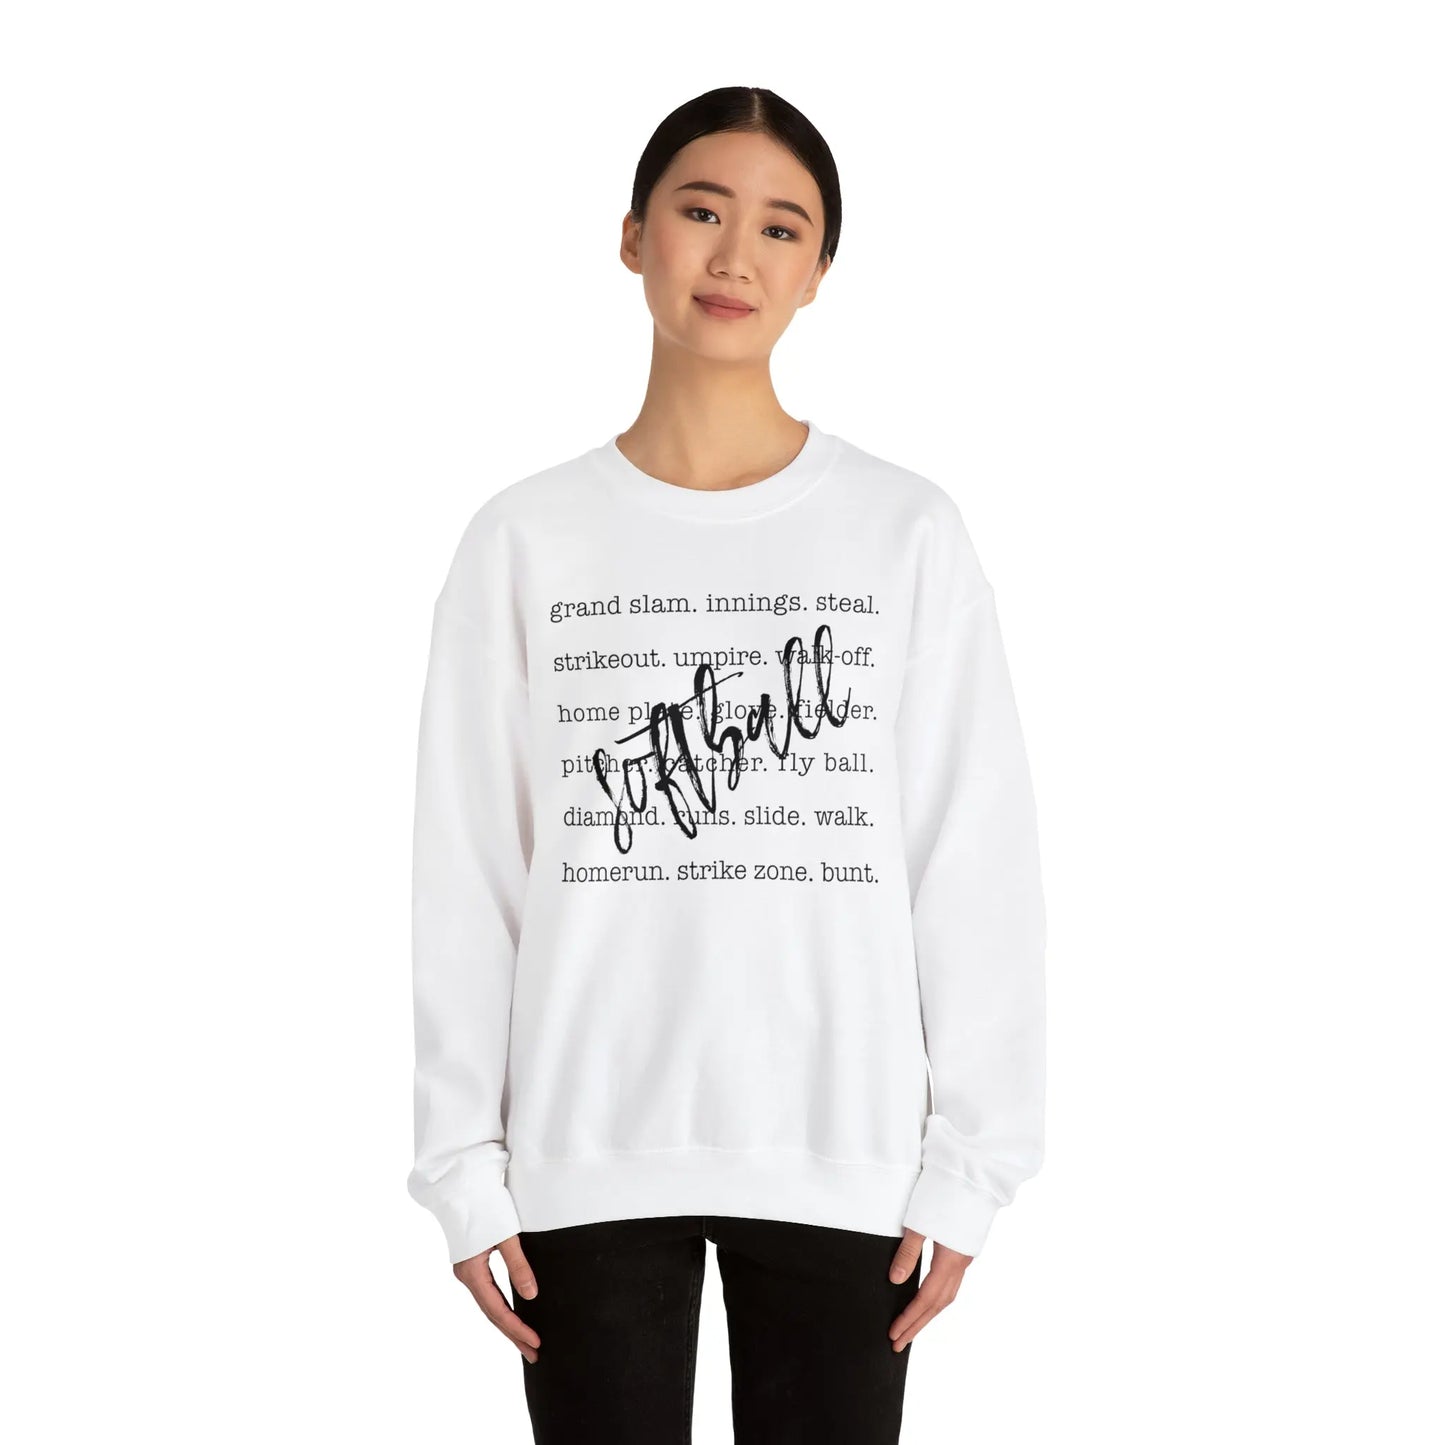 Softball Sports Sweatshirt - Amazing Faith Designs